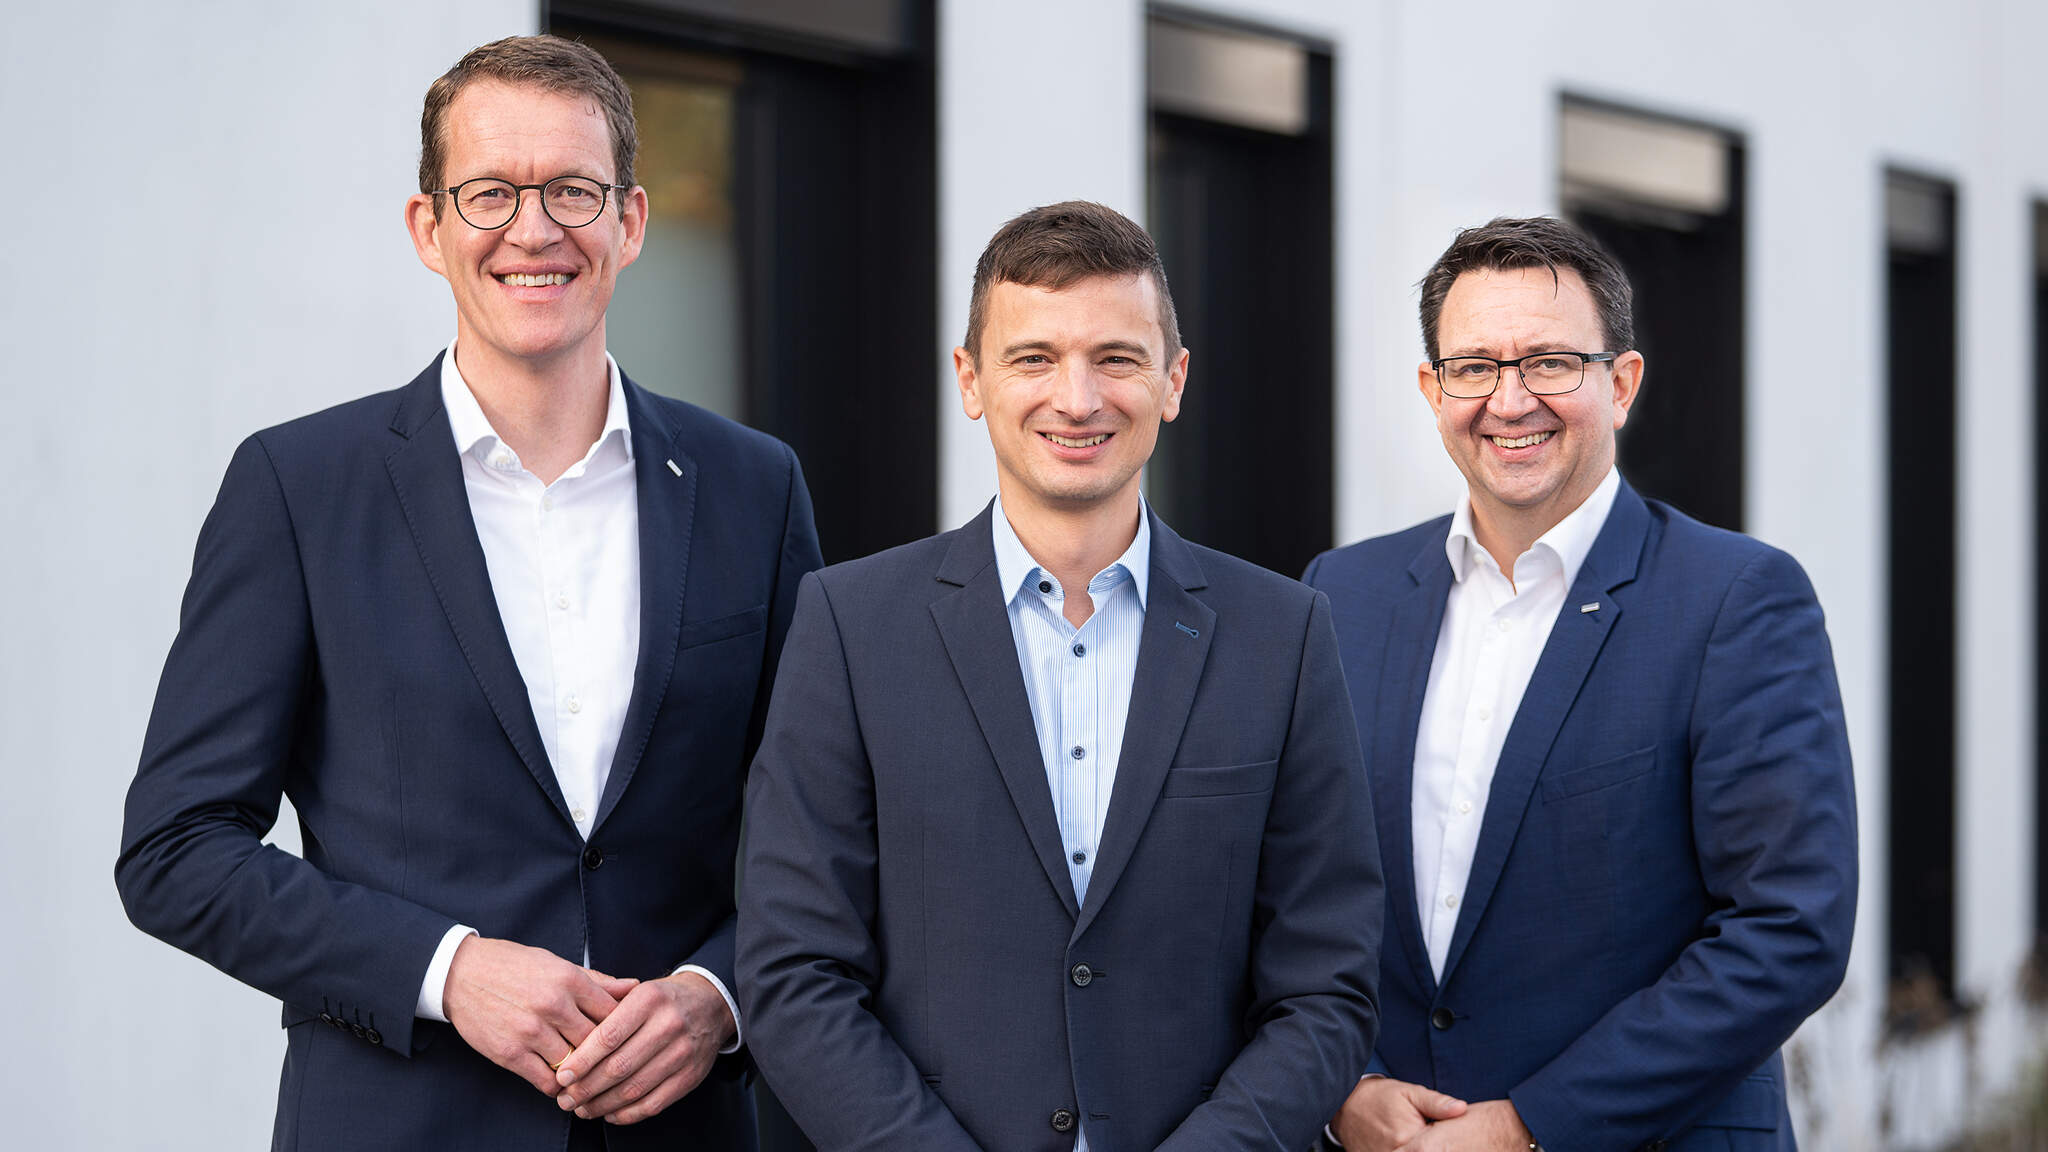 Burkhard Eling (CEO de DACHSER), Markus Lechner (Director General de kasasi) y Stefan Hohm (CDO Dachser).